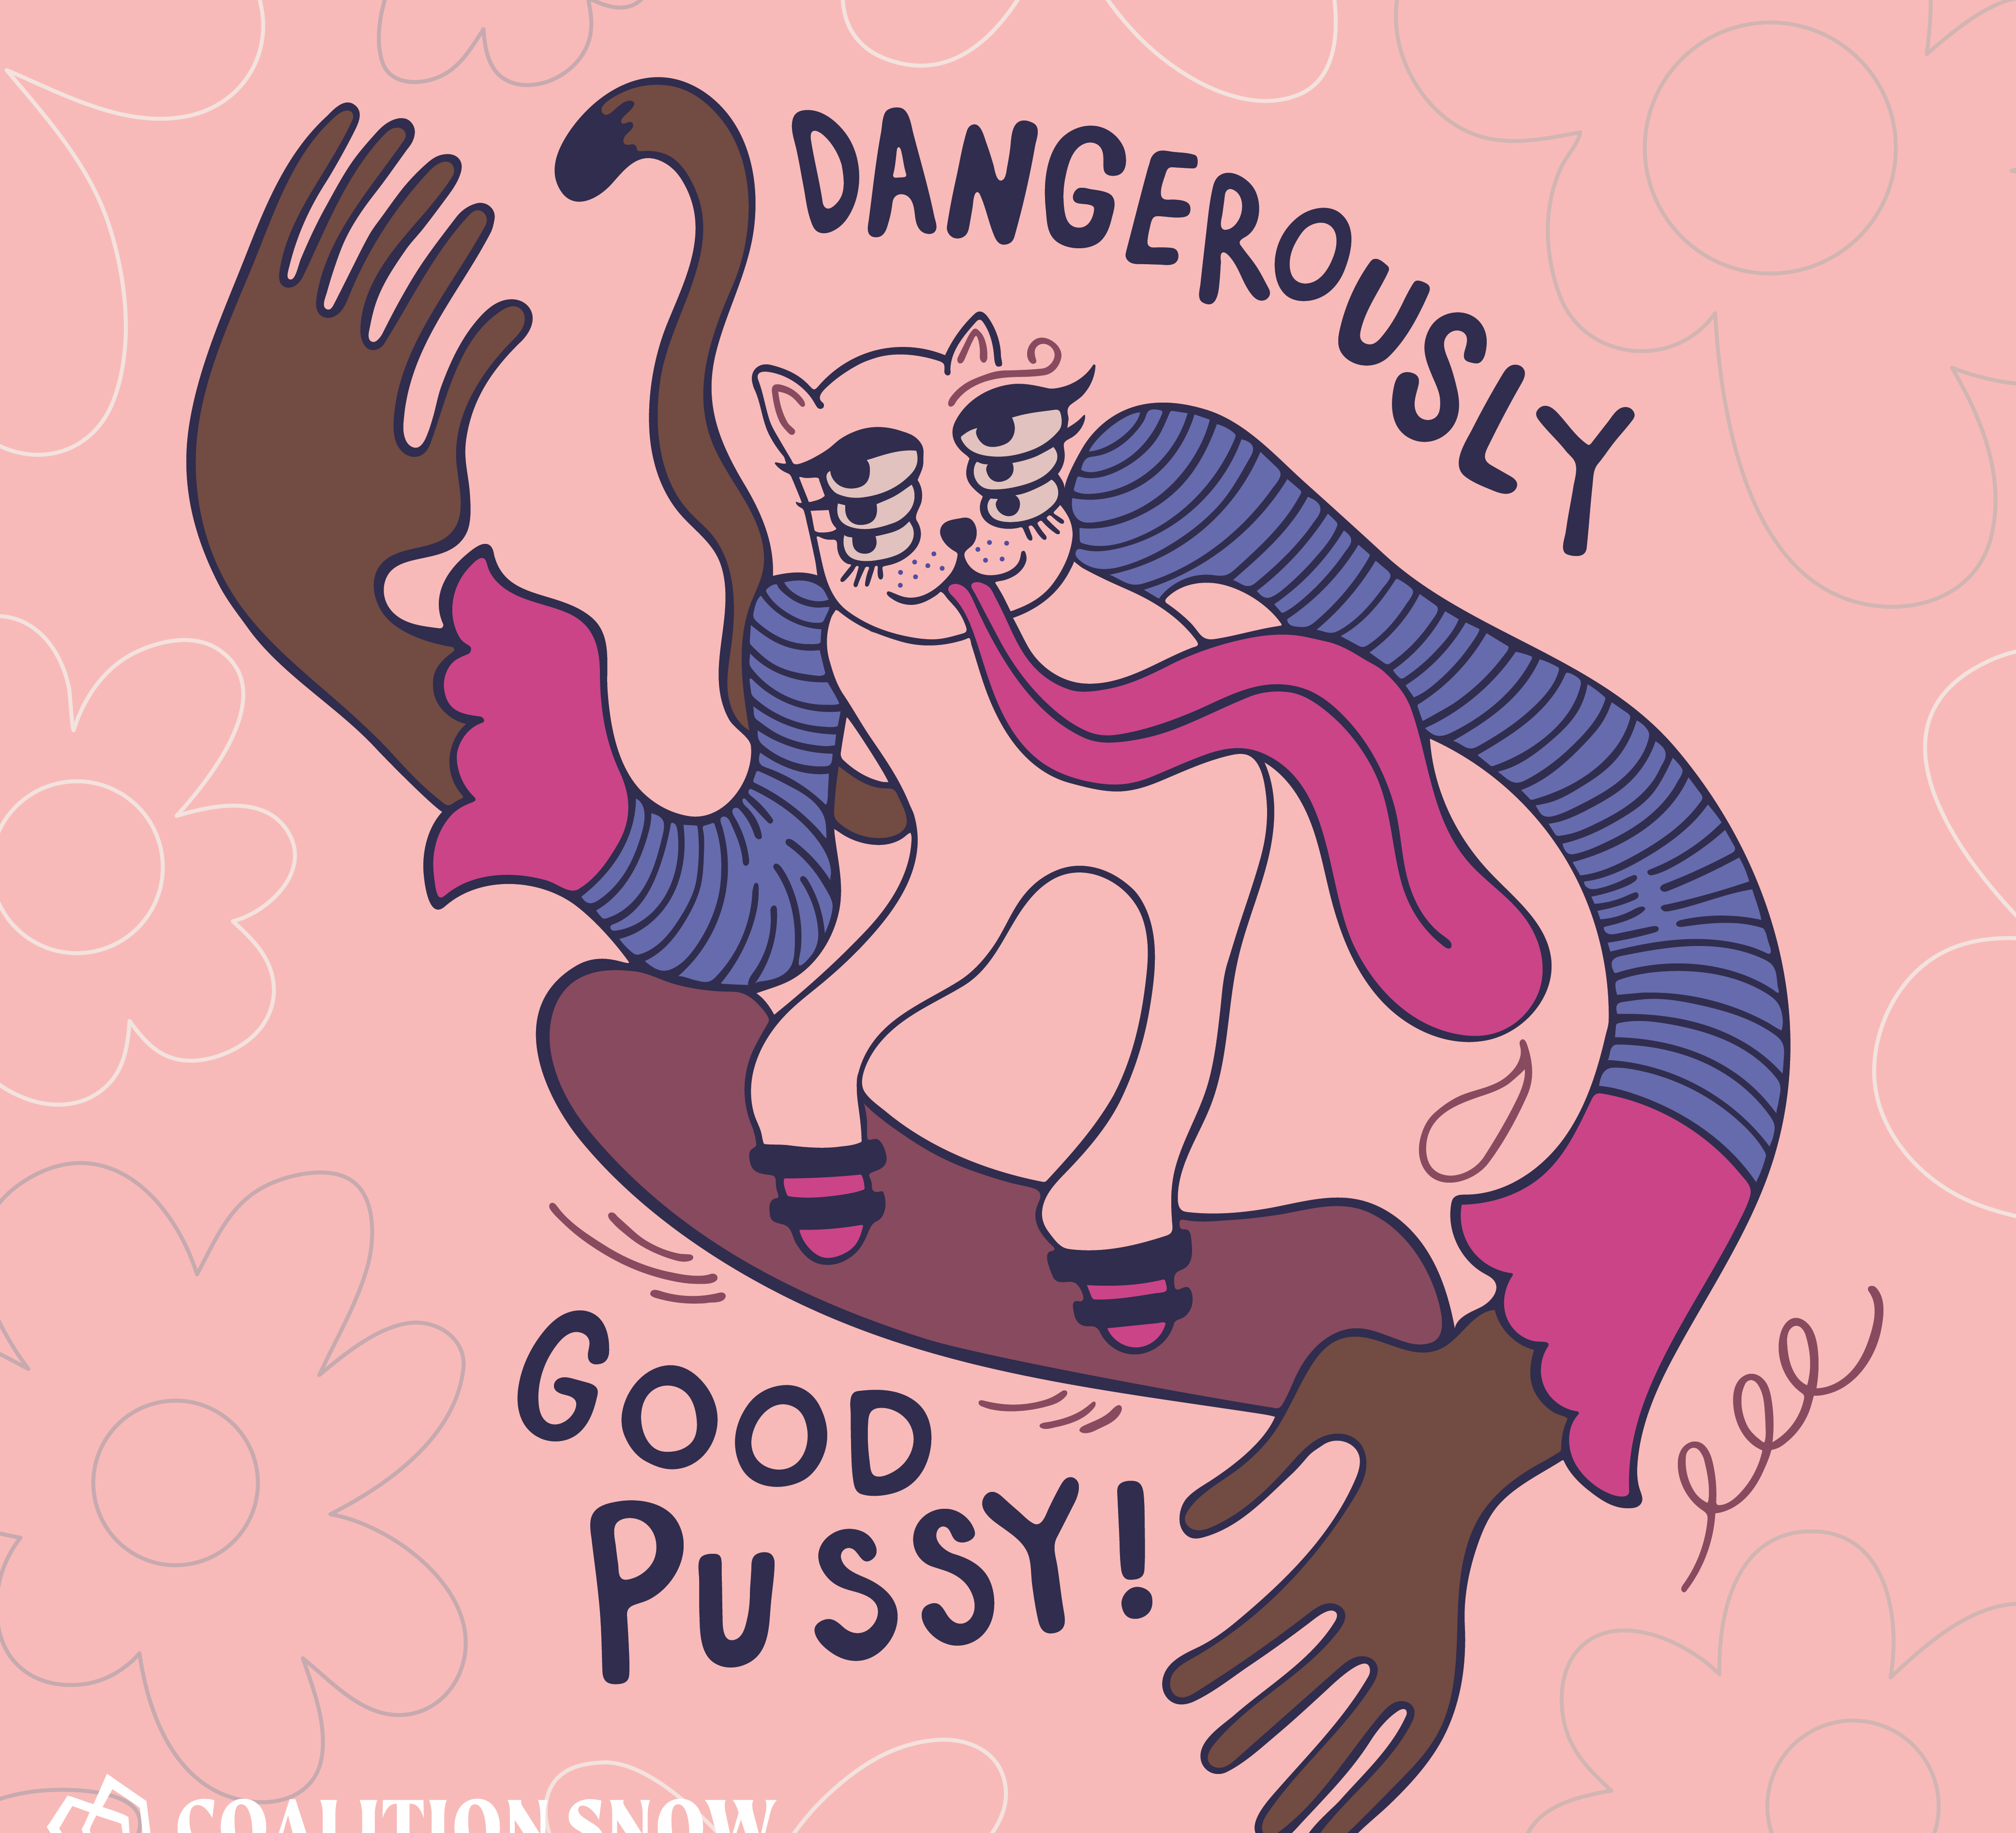 Playlist: Dangerously Good Pussy